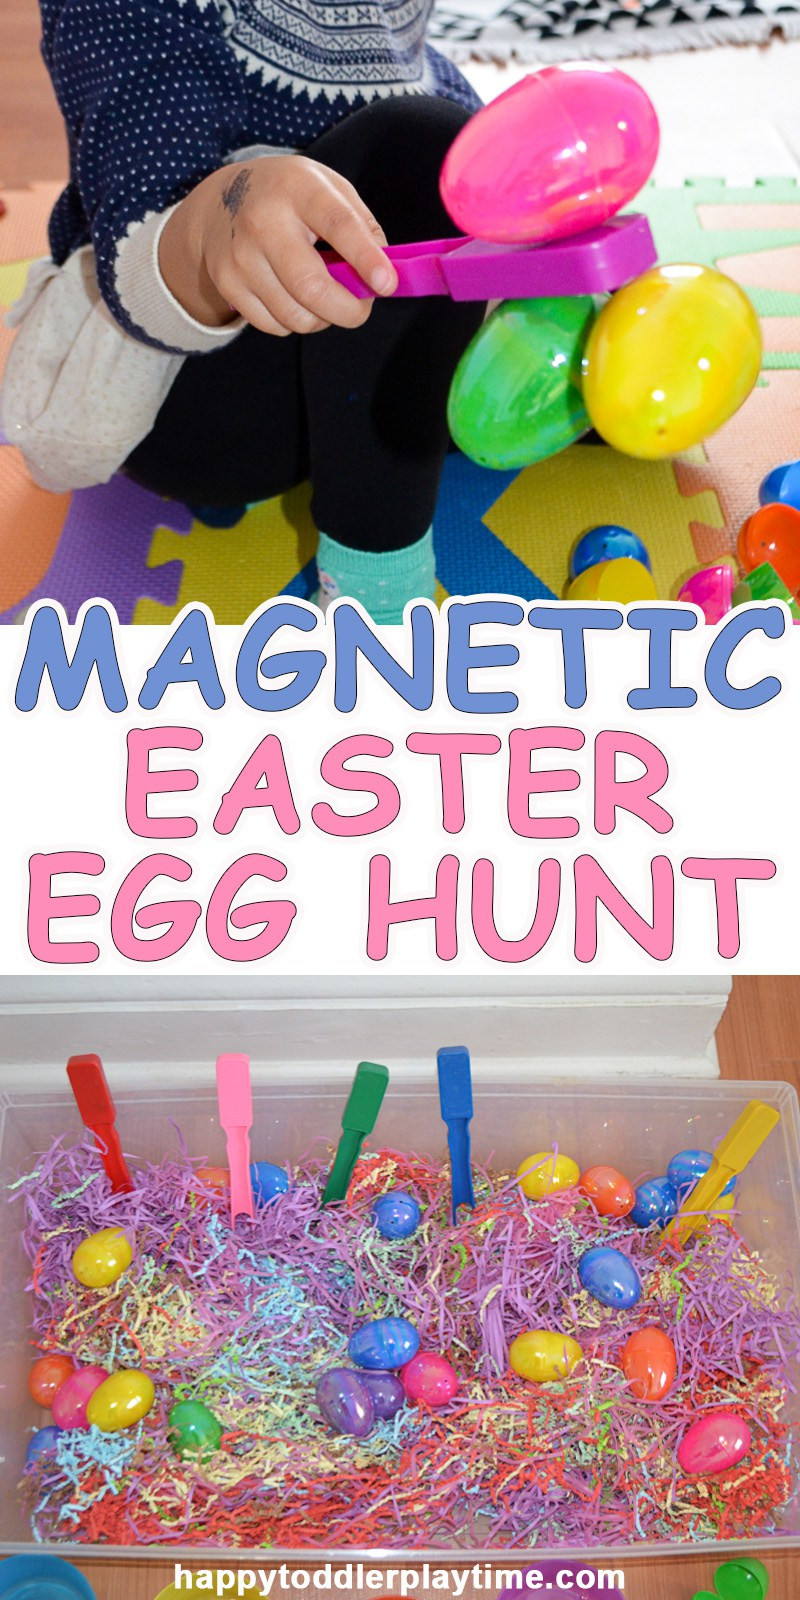 Fun Easter Egg Hunt Ideas
 Creative Easter Egg Hunt Ideas That Will Keep Kids Hopping